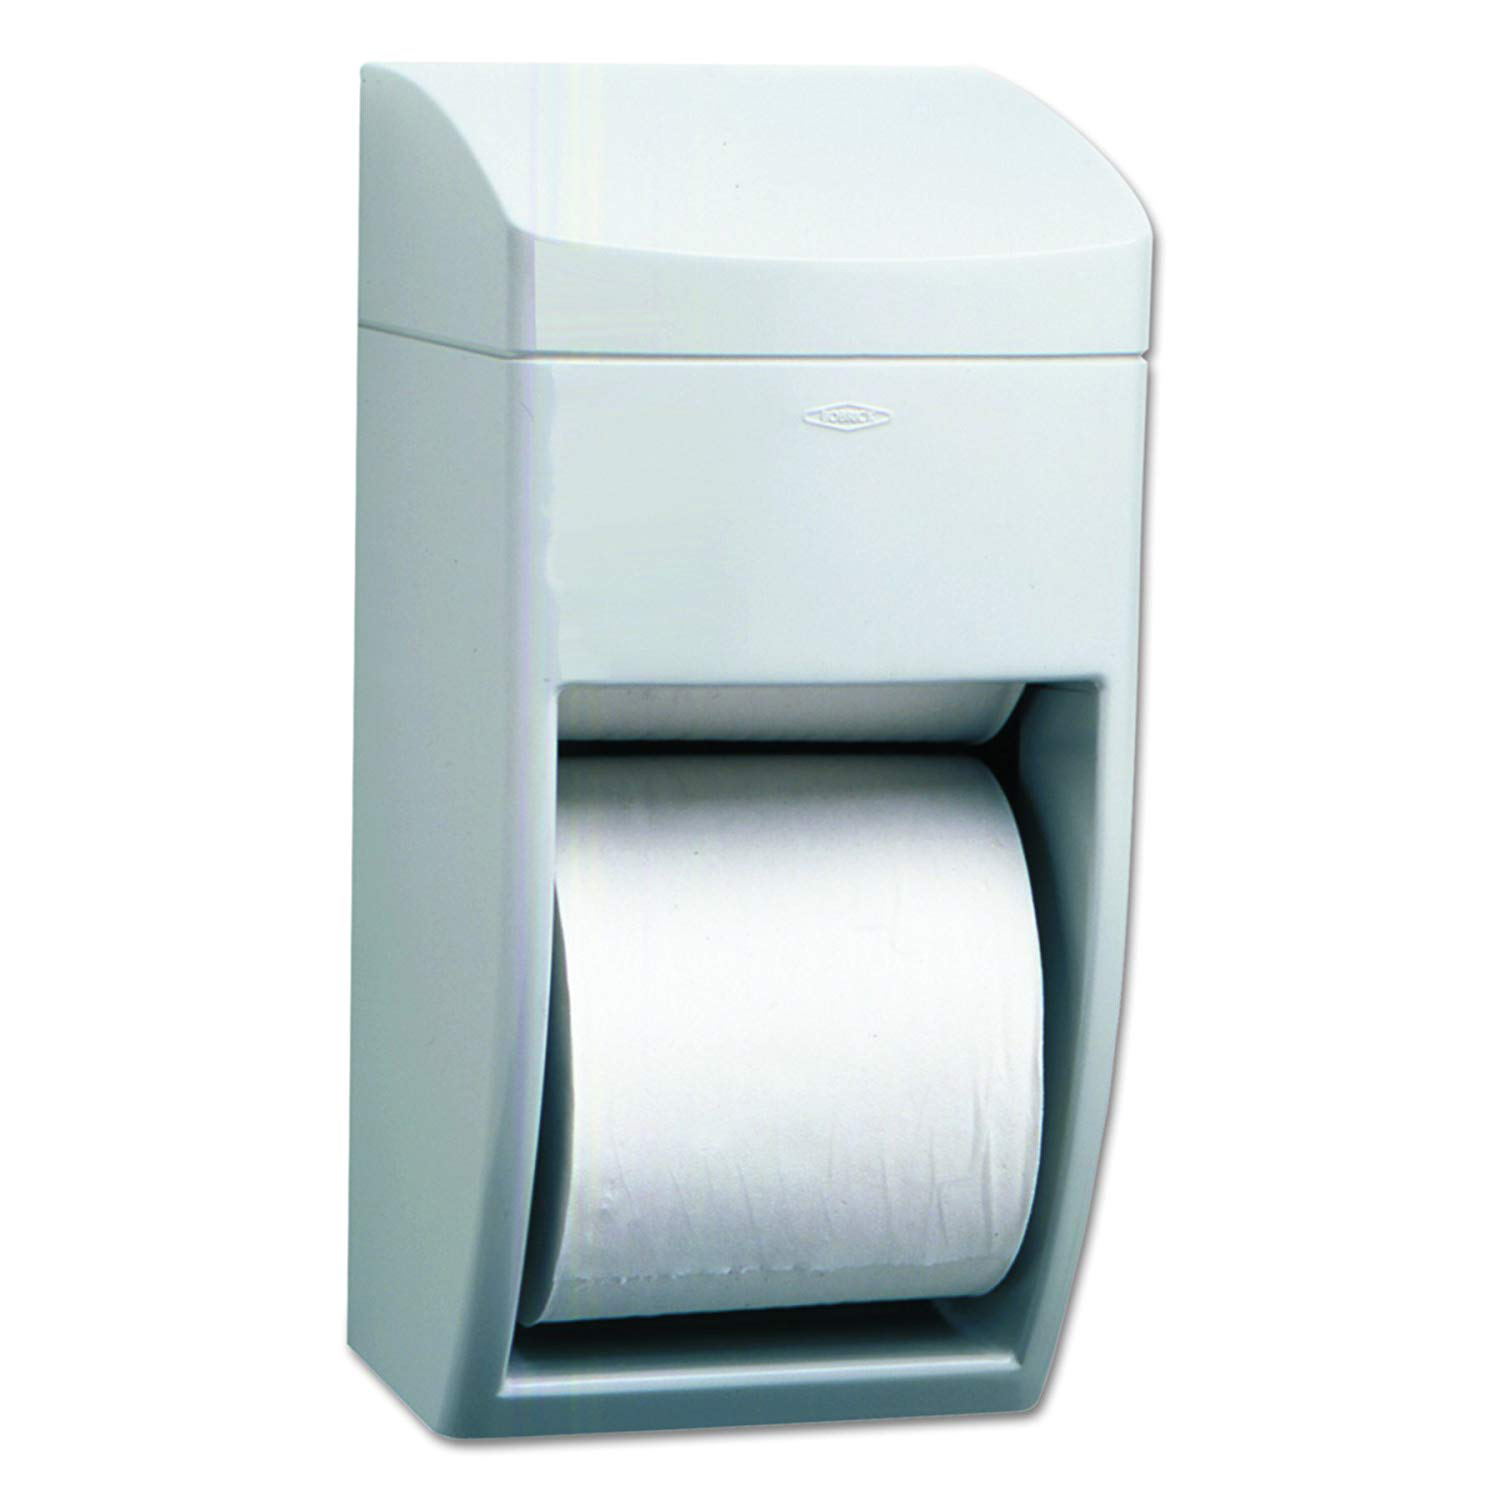 MatrixSeries 2-Roll Toilet Paper Dispenser In Grey